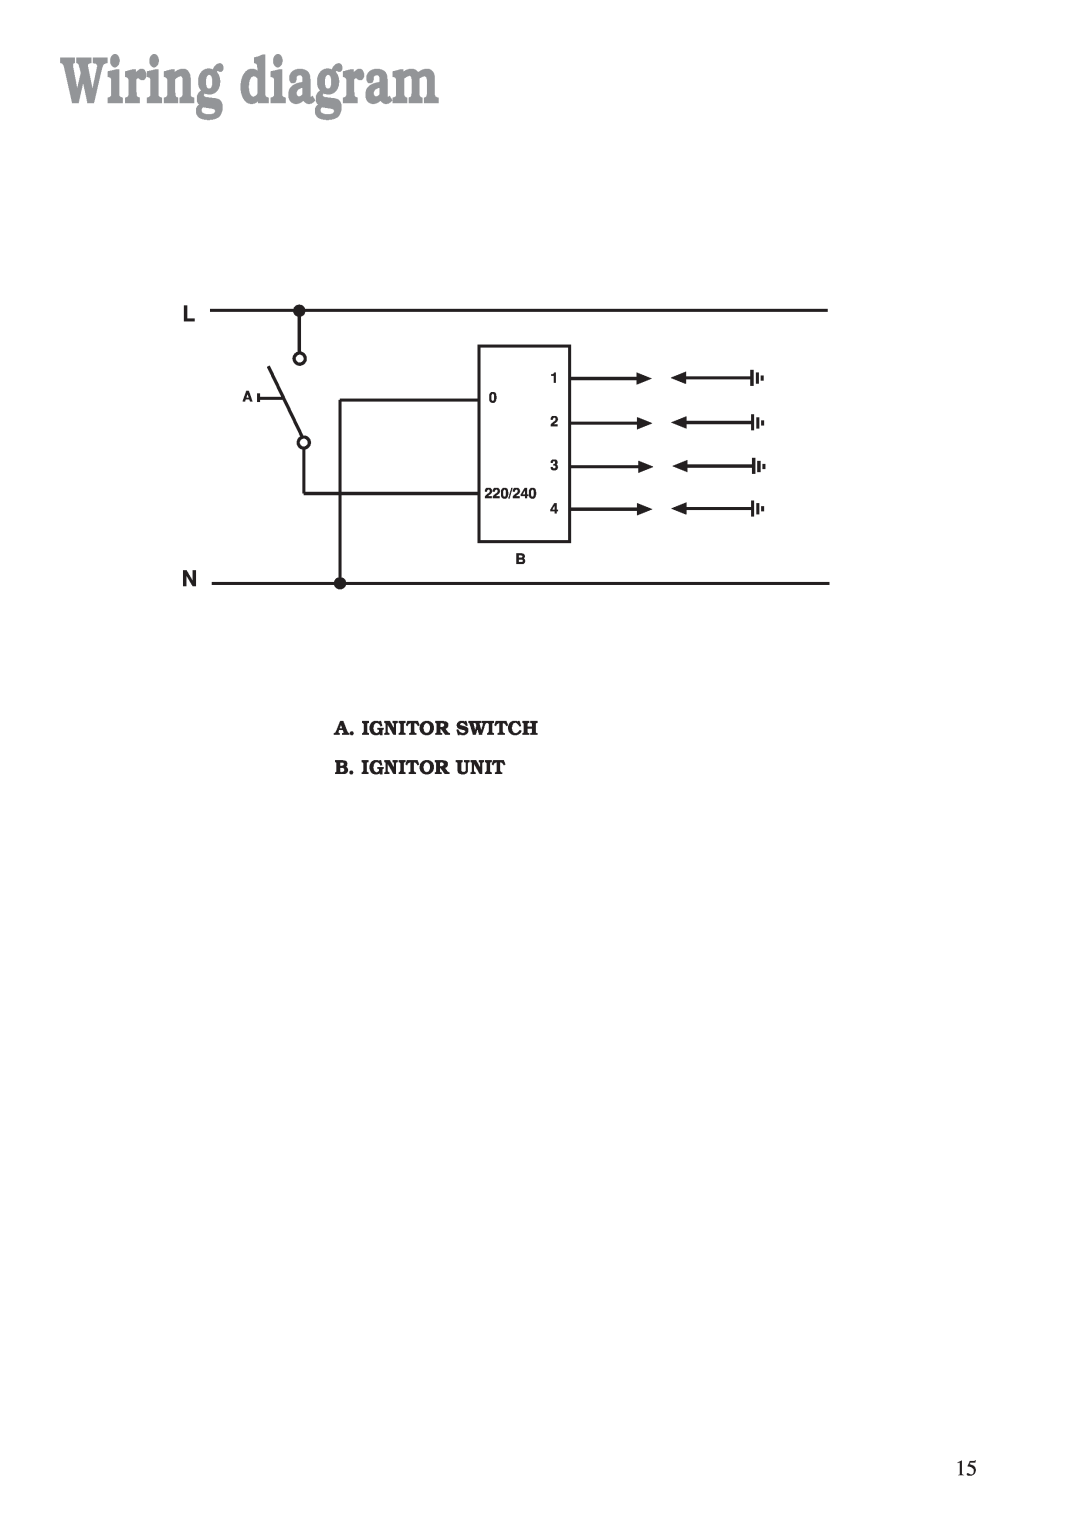 Zanussi ZAF 42 manual Wiring diagram, A. Ignitor Switch B. Ignitor Unit, 220/240 